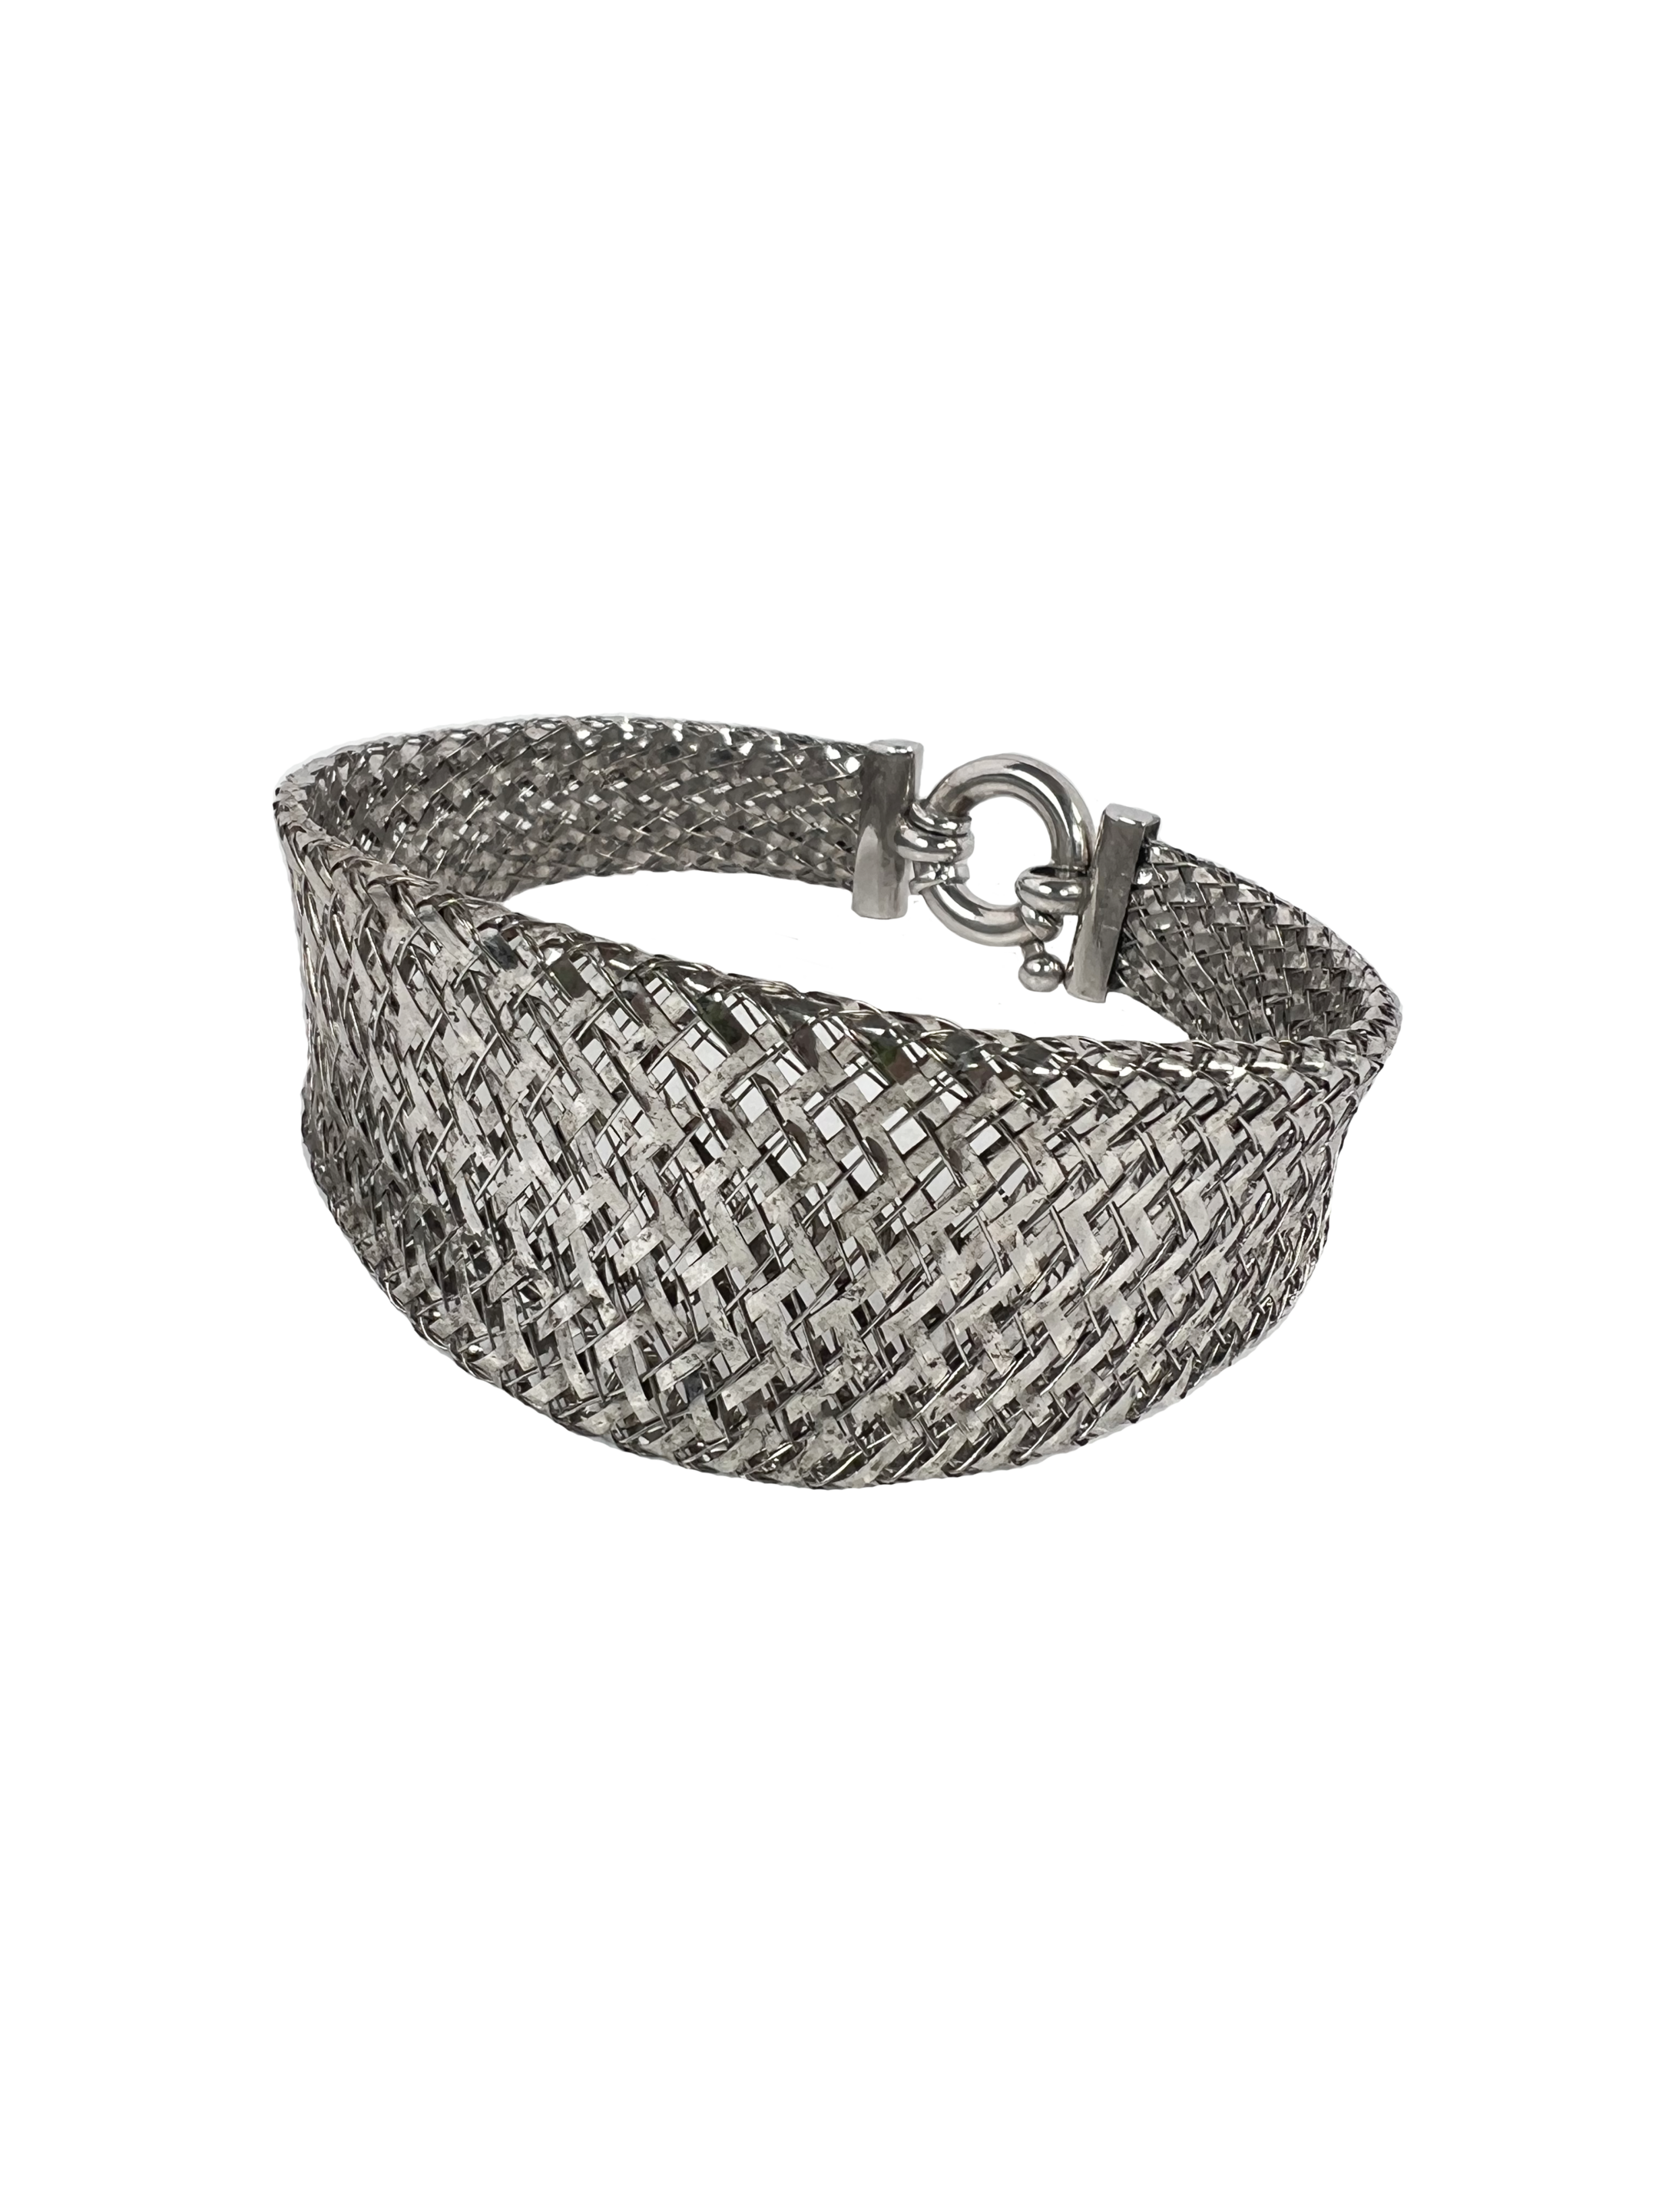 Silver bracelet knitted pattern